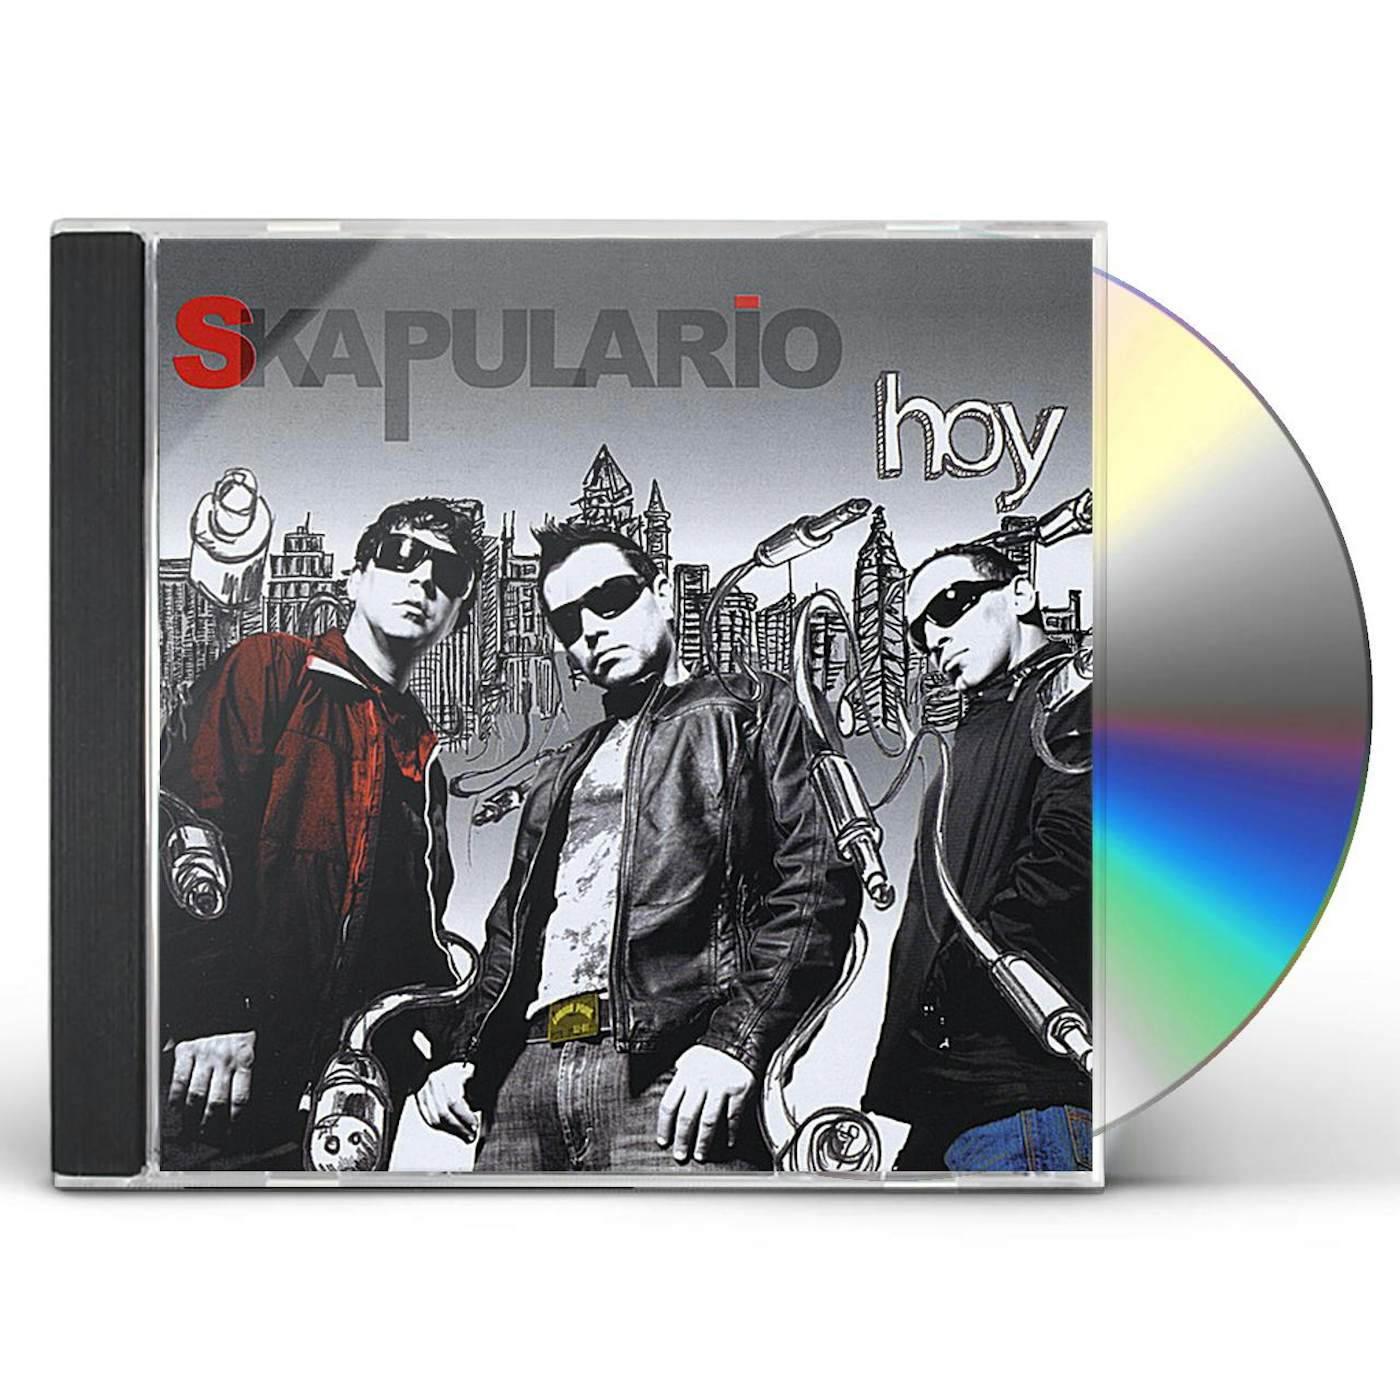 Skapulario HOY CD